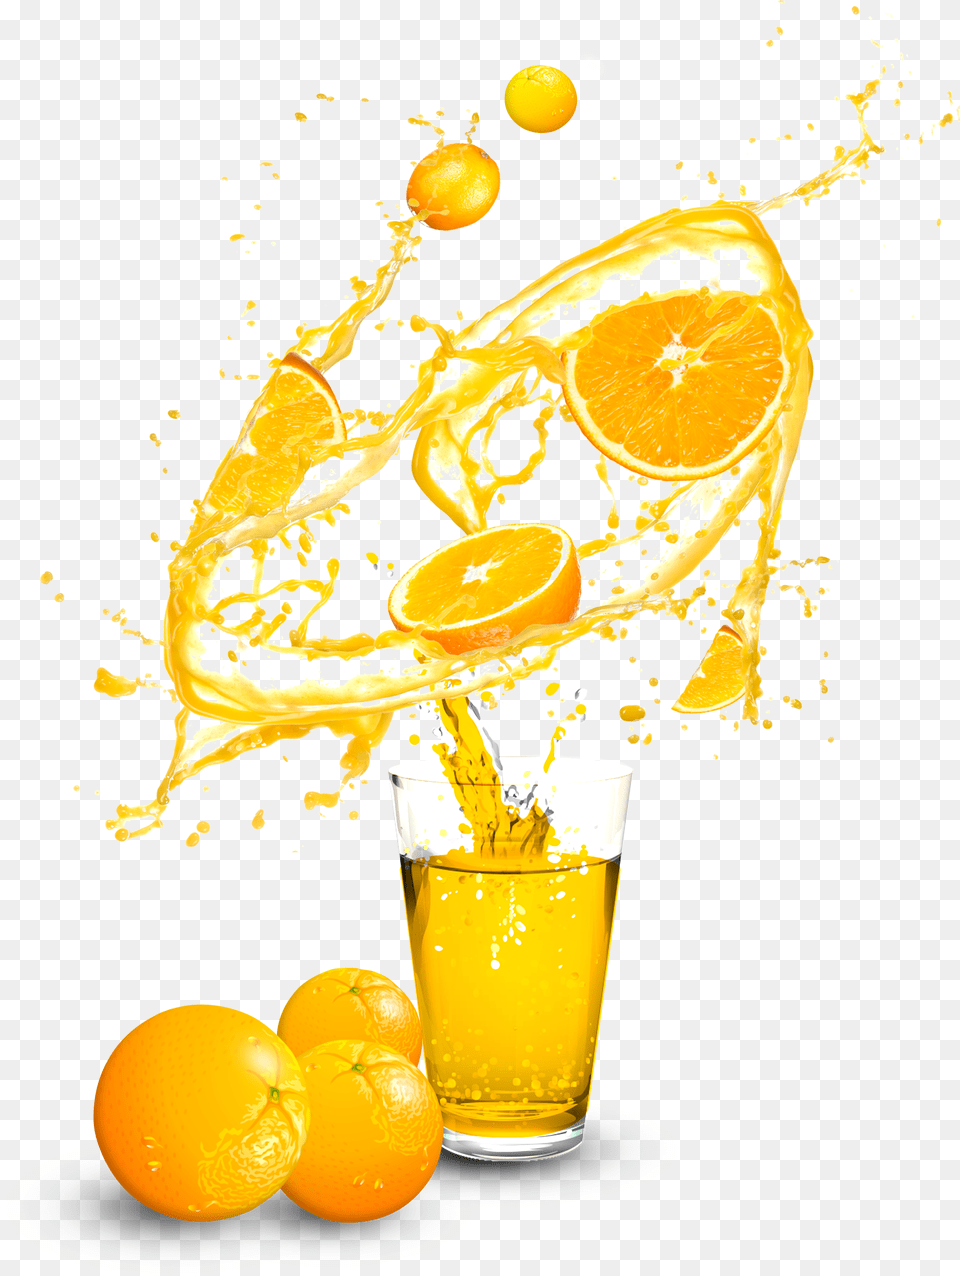 Juice Background Photo Transparent Background Orange Juice, Beverage, Orange Juice, Glass, Alcohol Png Image